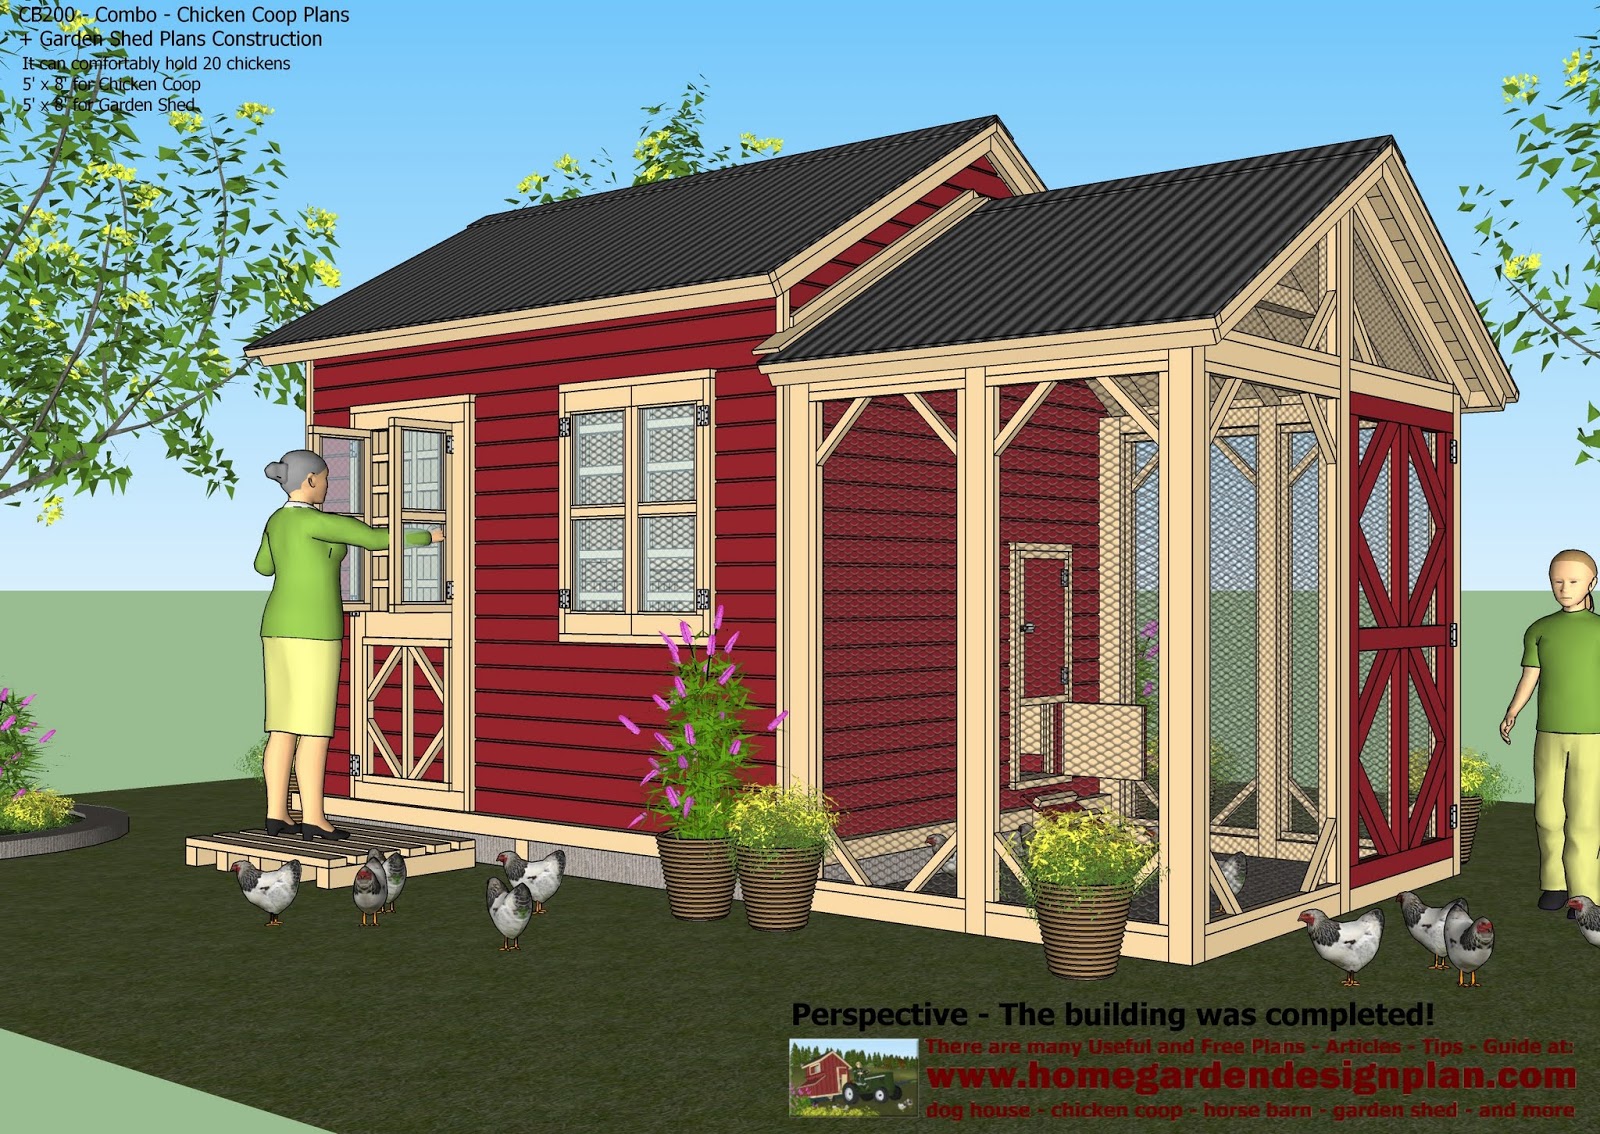 ... Chicken Coop Plans Construction + Garden Sheds - Storage Sheds Plans